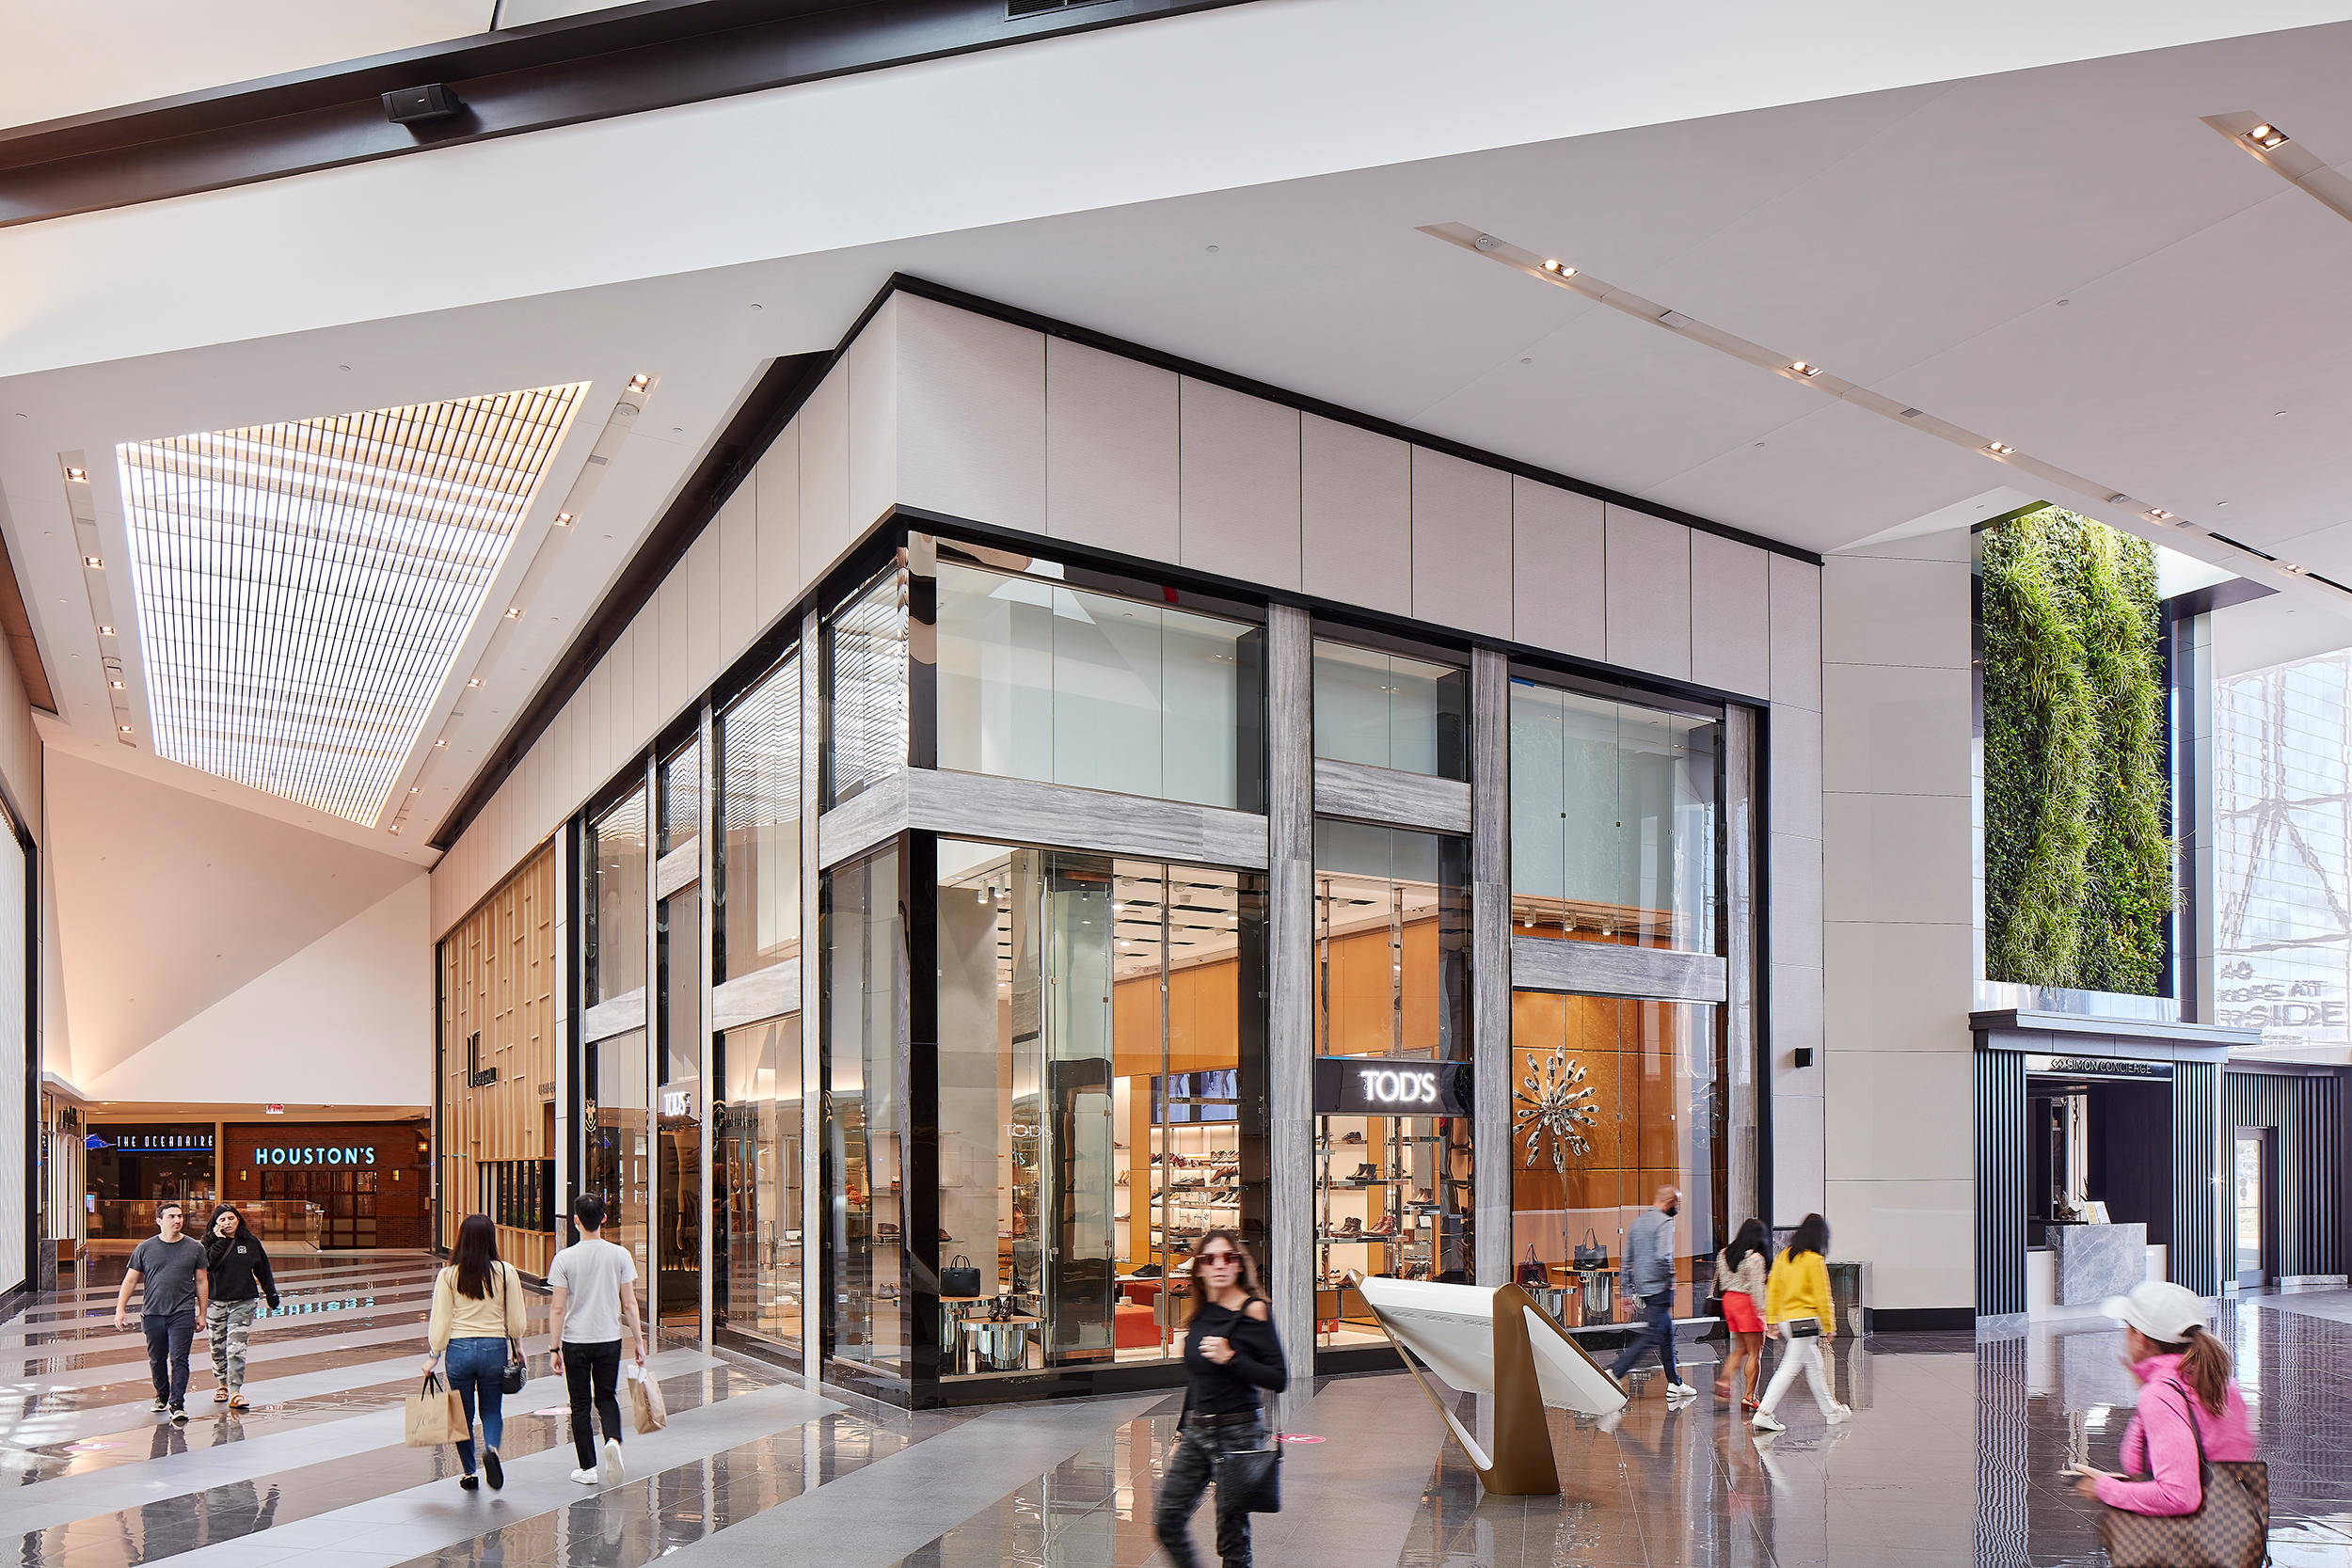 Louis Vuitton Hackensack Riverside Square store, United States